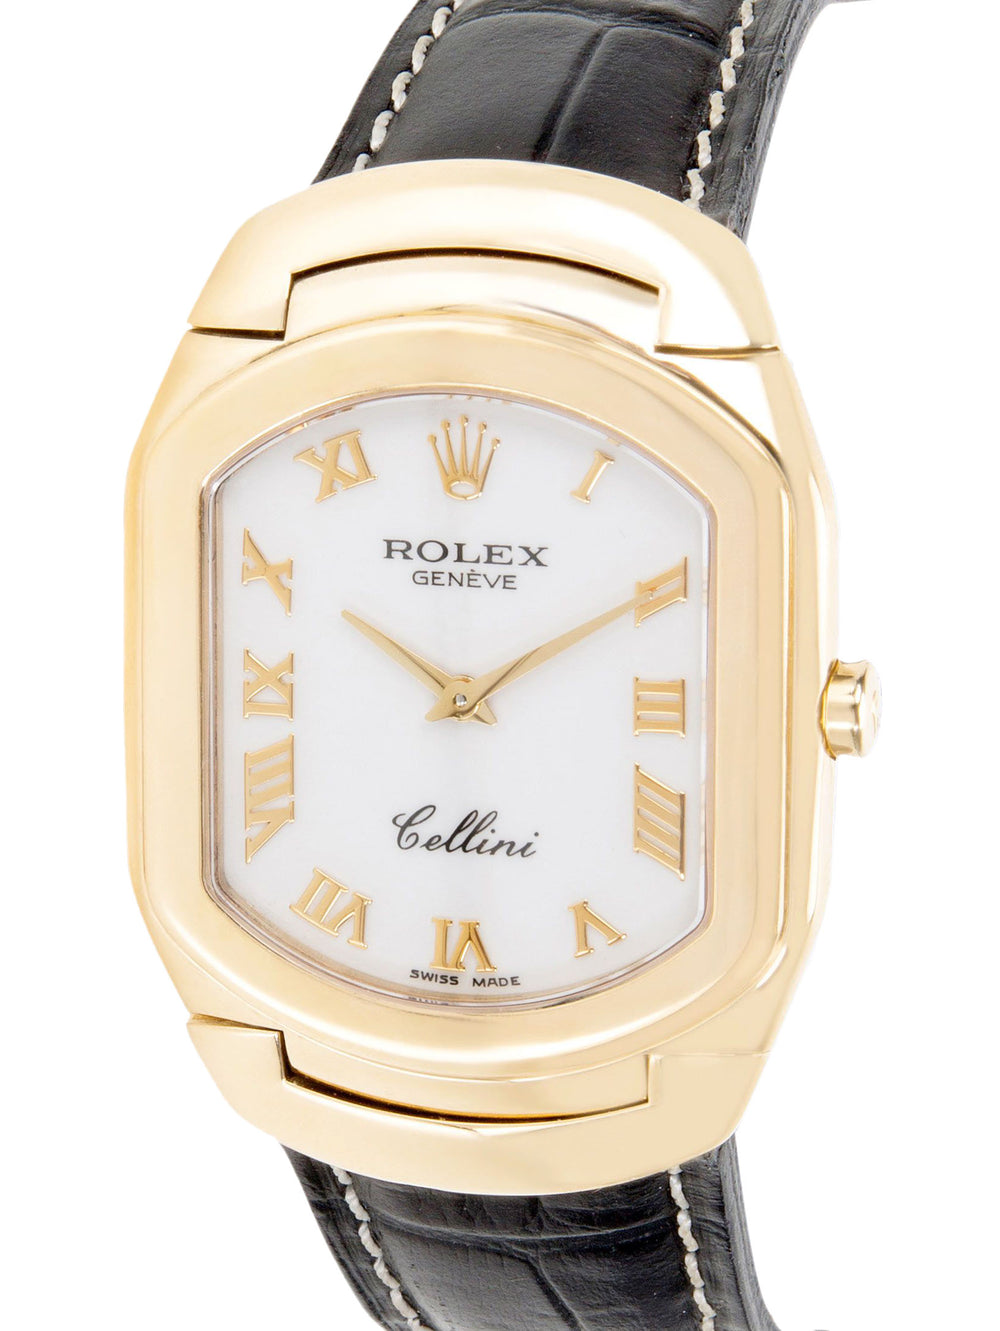 Rolex Cellini 6633 1